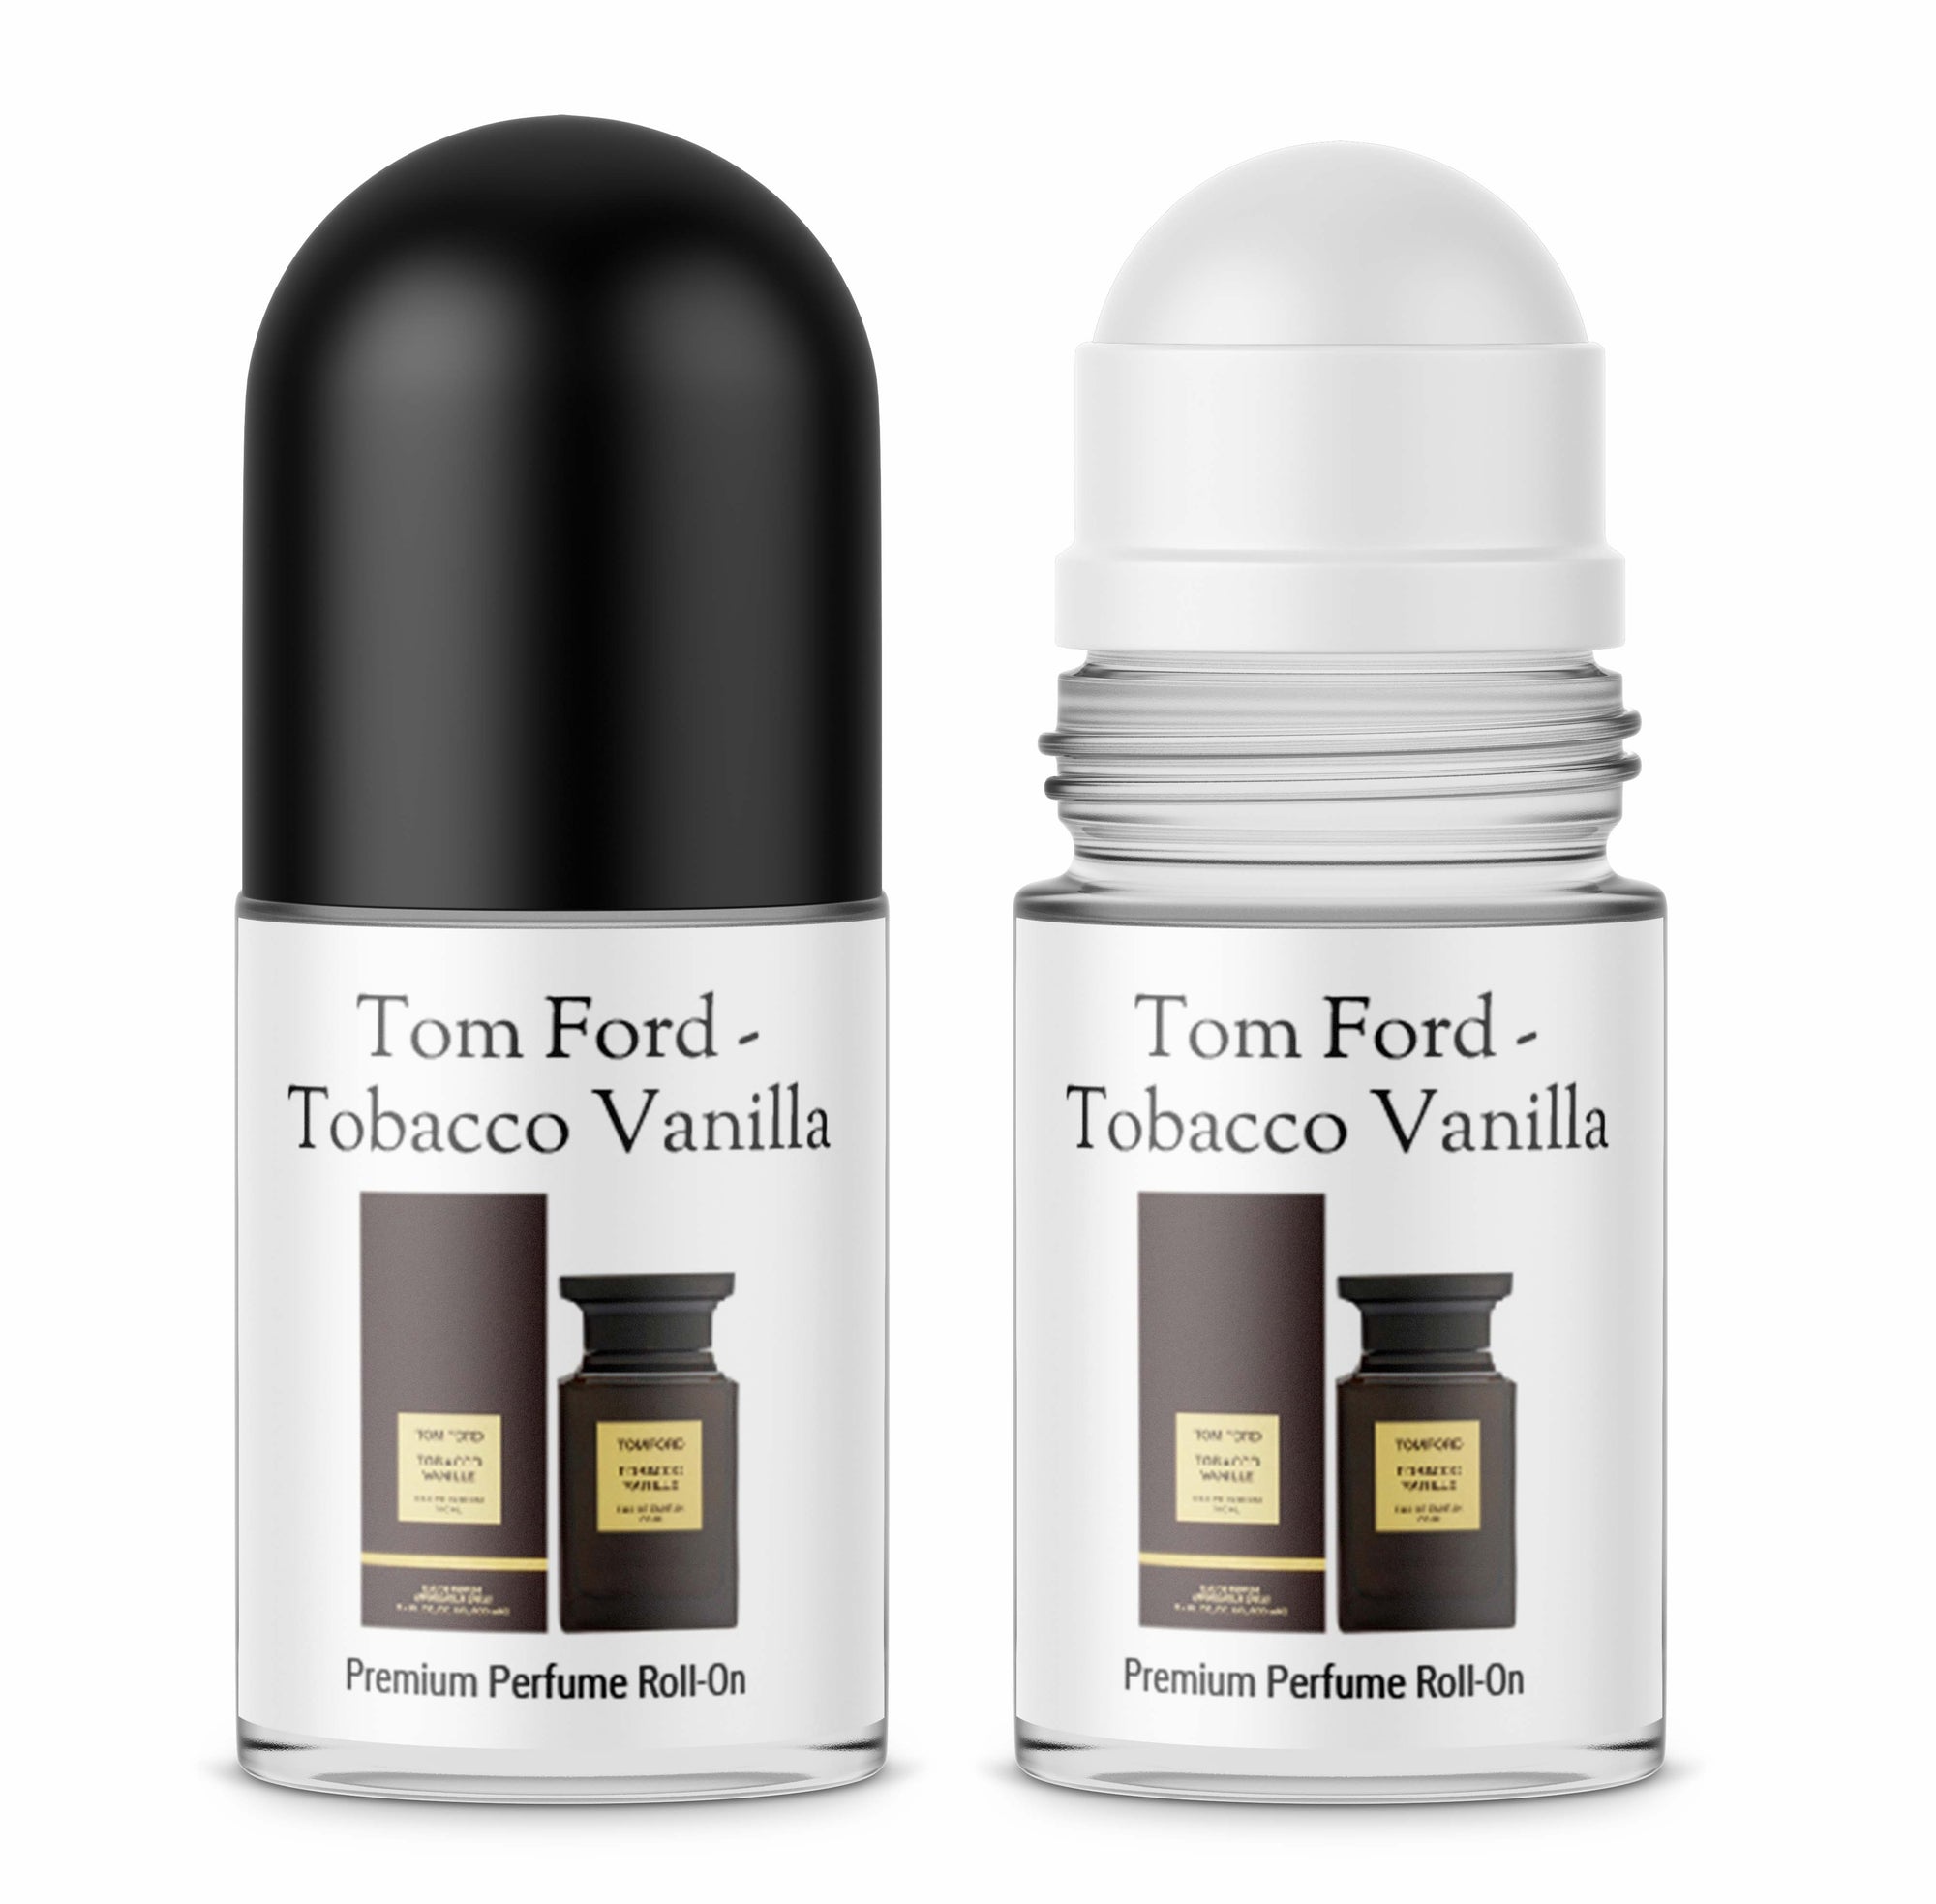 Tom Ford Tobacco Vanille Type Fragrance Oil